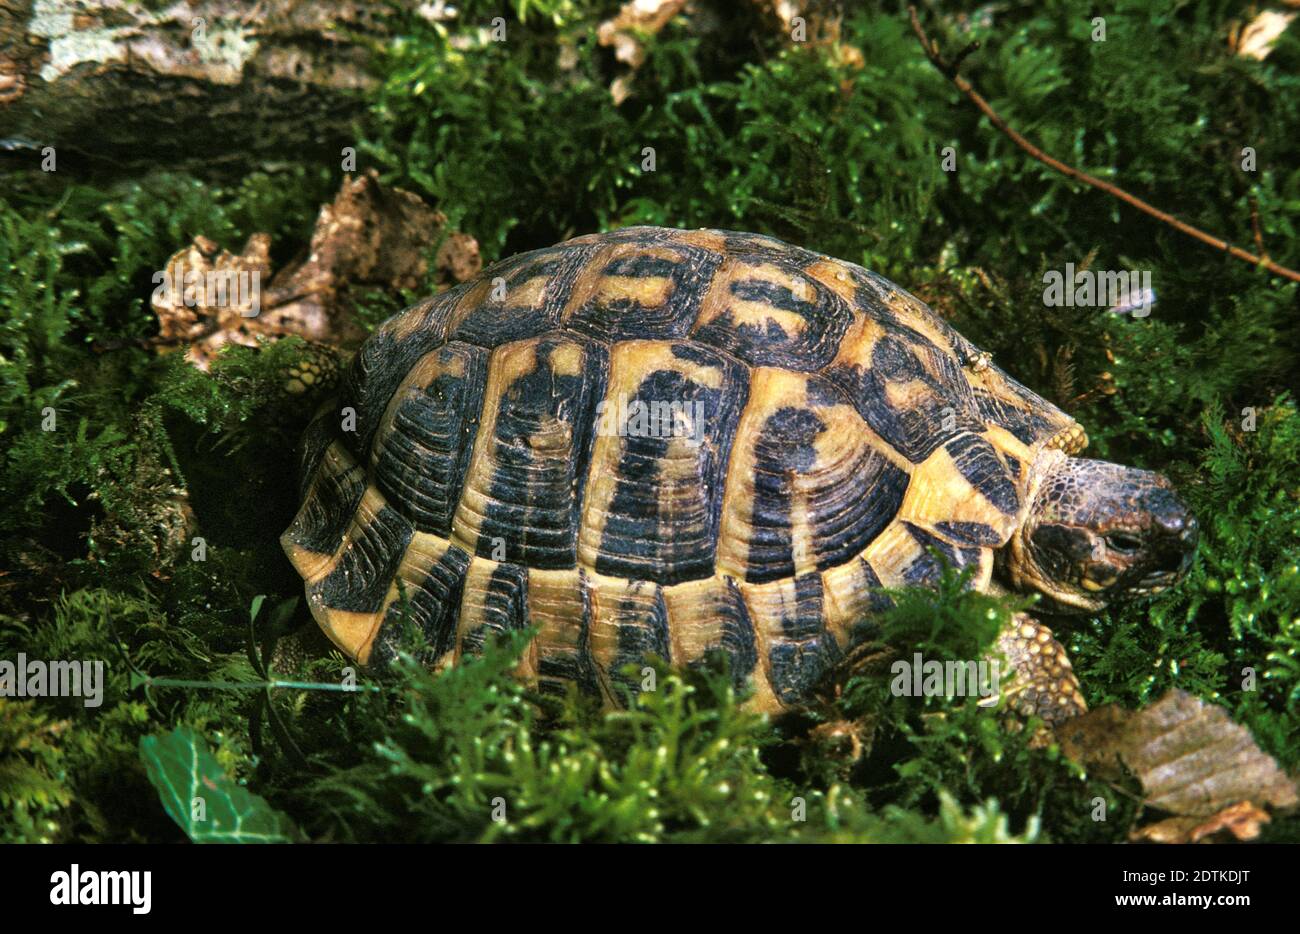 Hermann's Tortoise, testudo hermanni standing on Moss Stock Photo